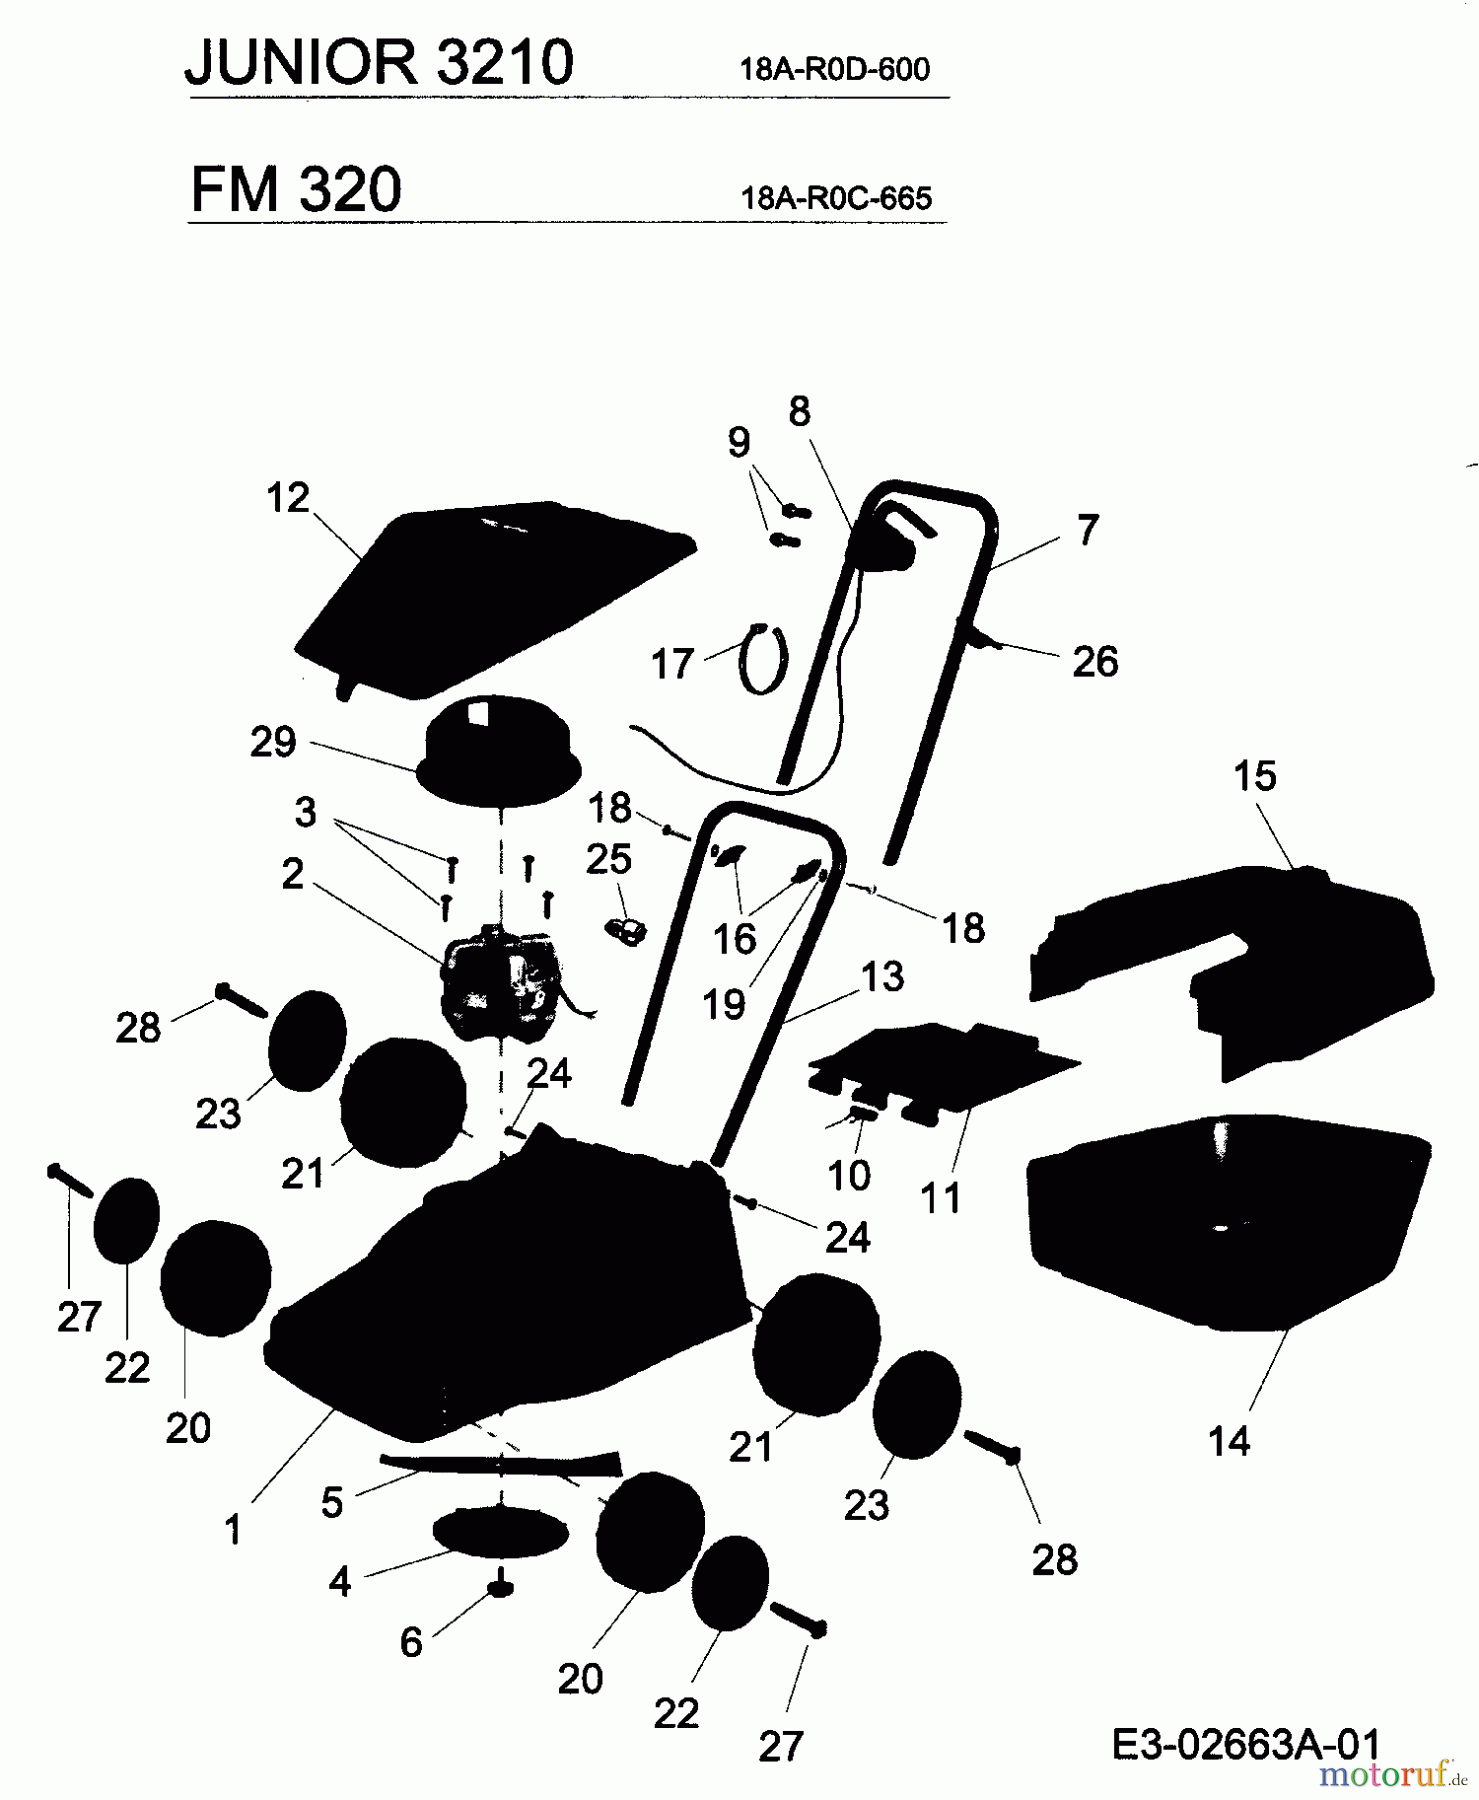  MTD Elektromäher FM 320 18A-R0C-665  (2006) Grundgerät